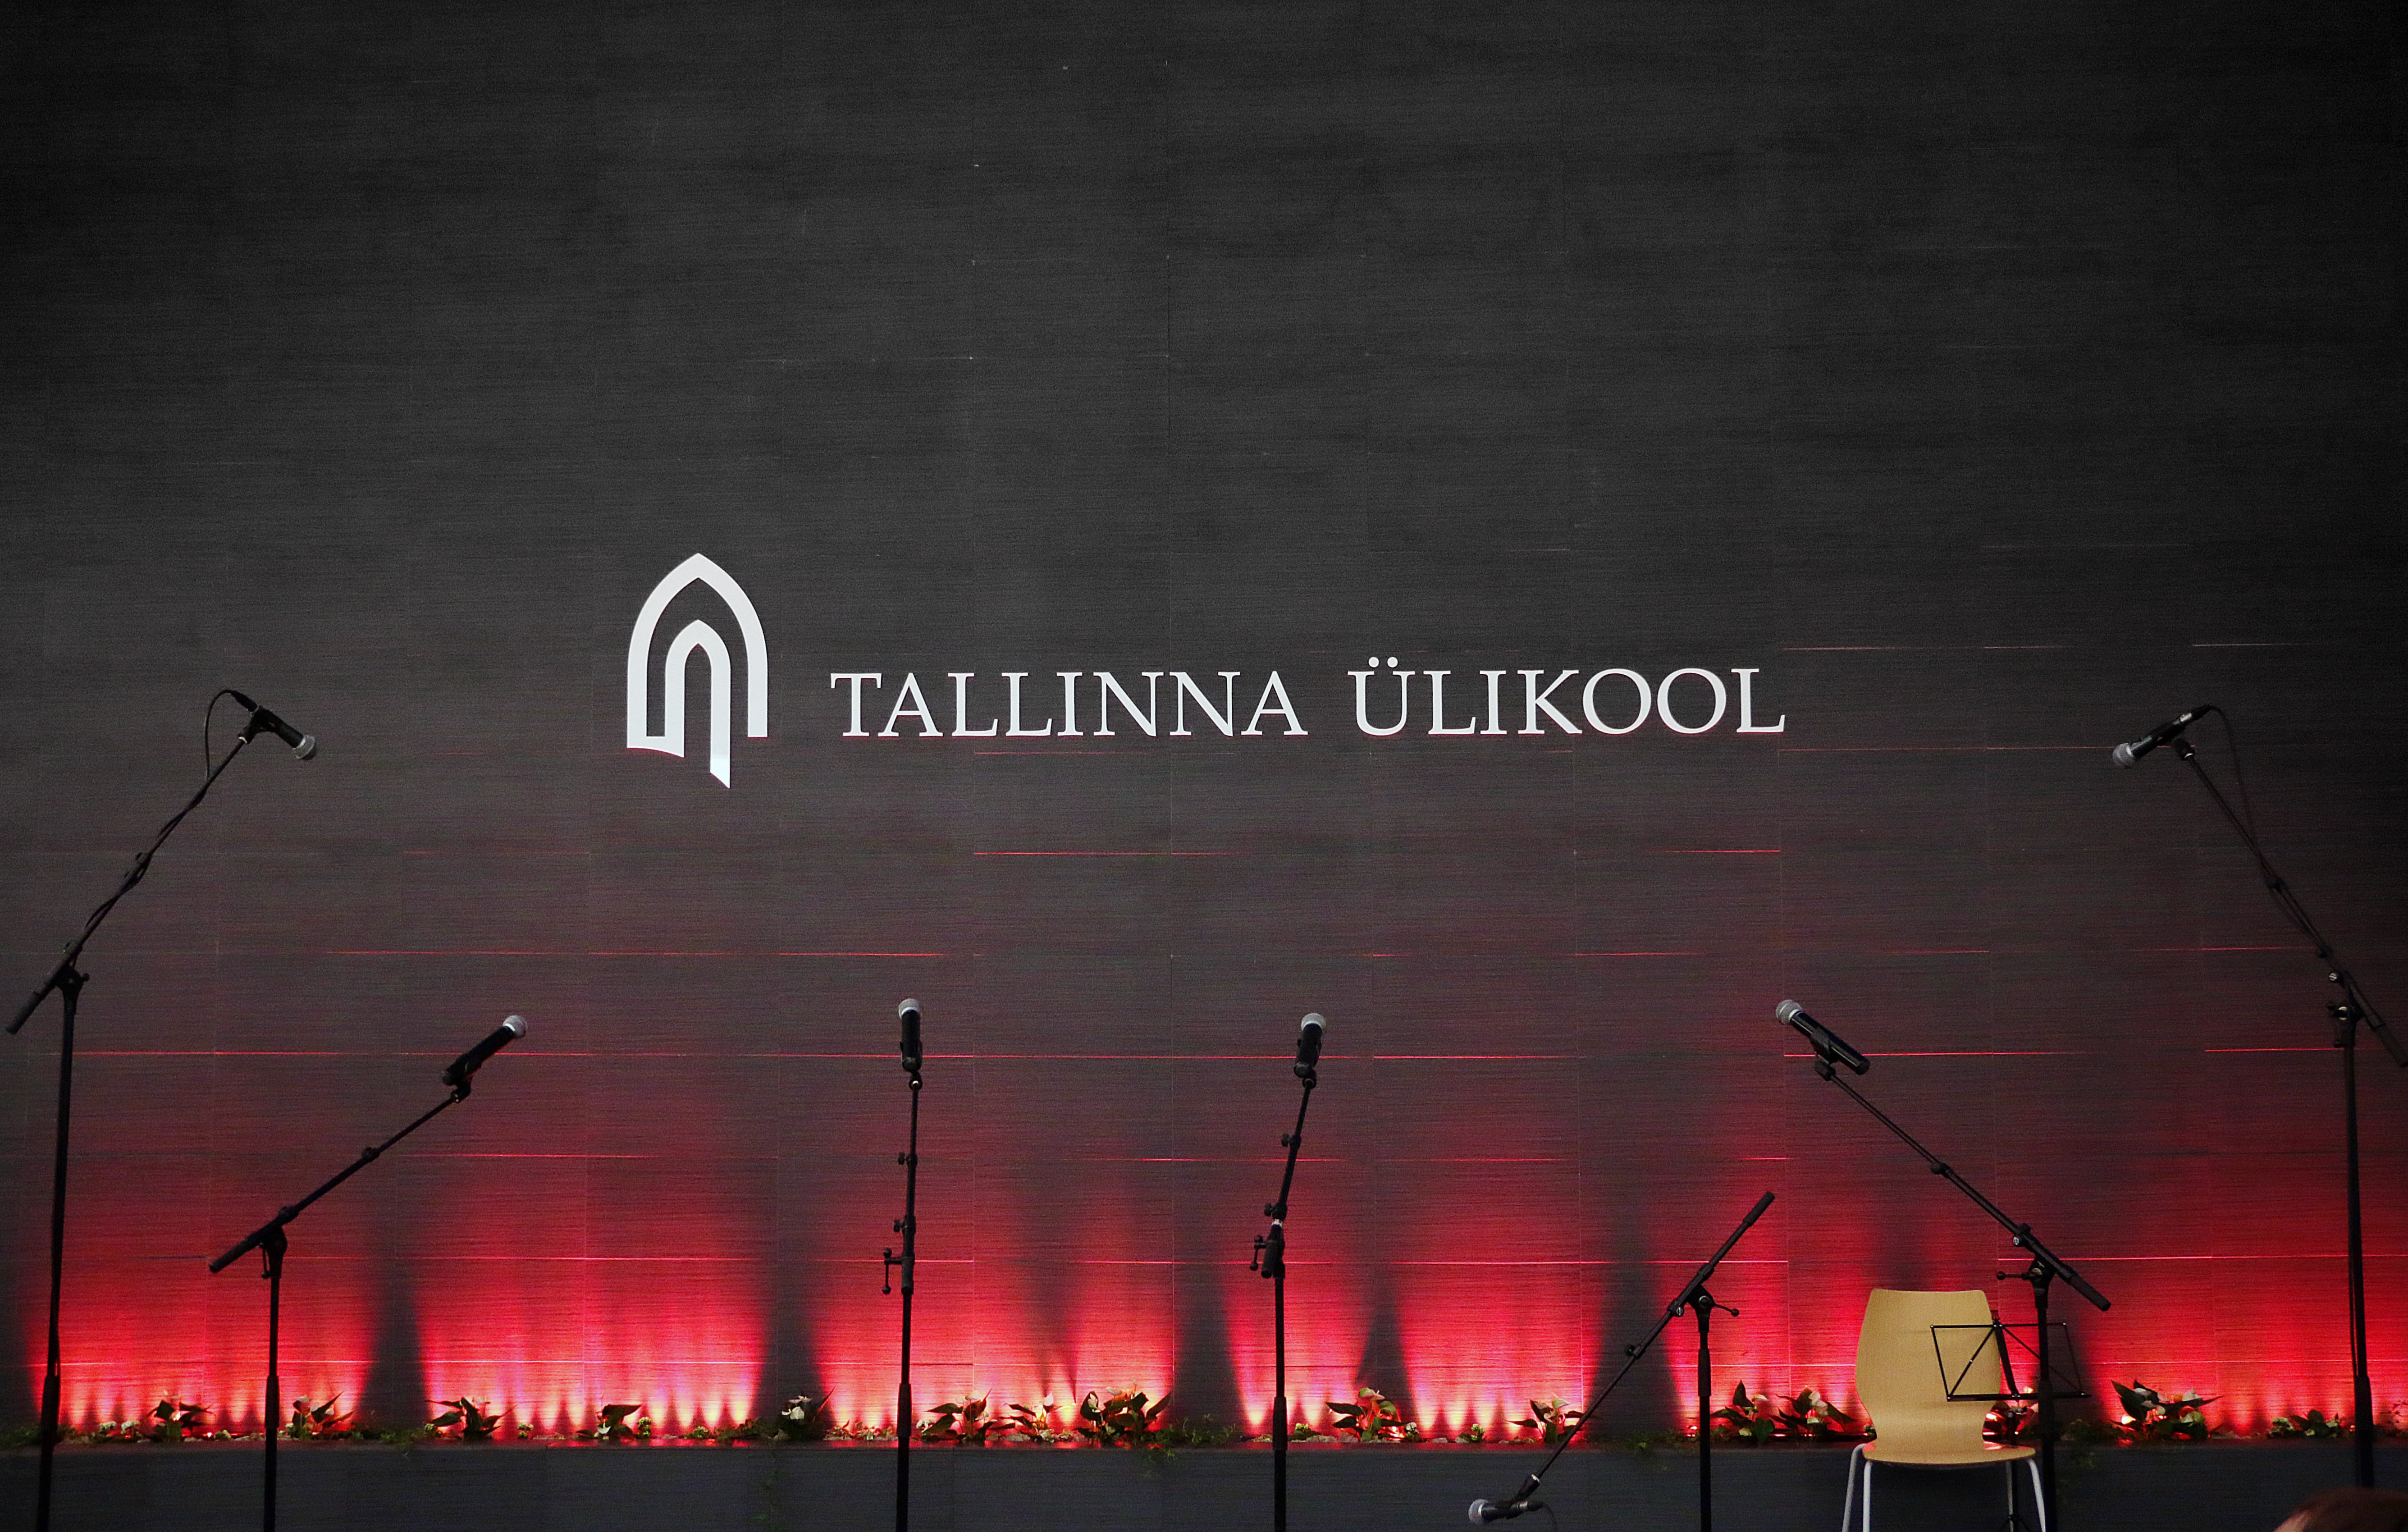 Tallinn university logo on wall